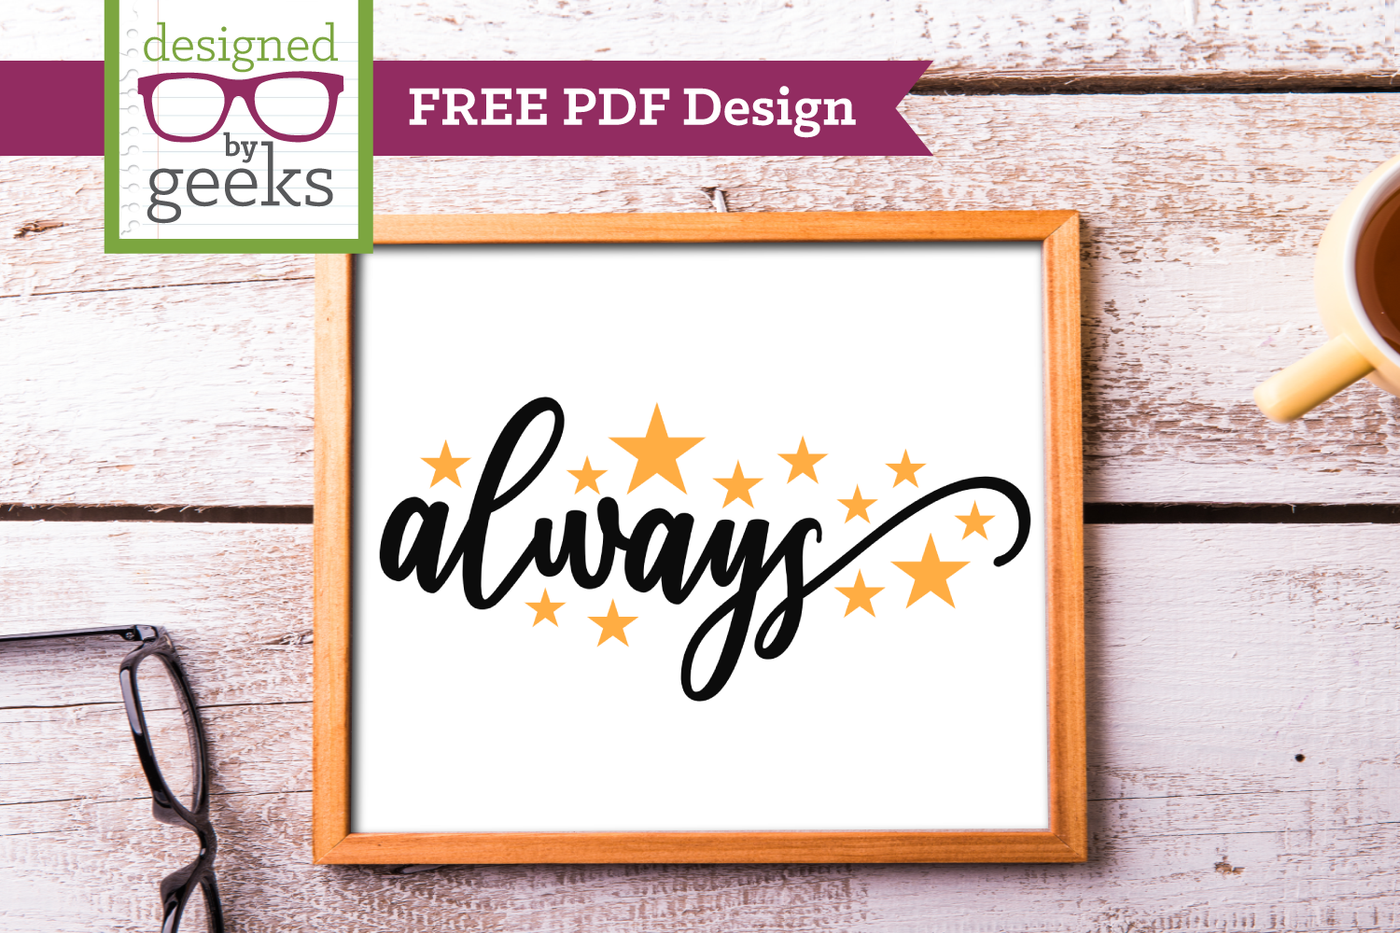 Free PDF Design - always with stars